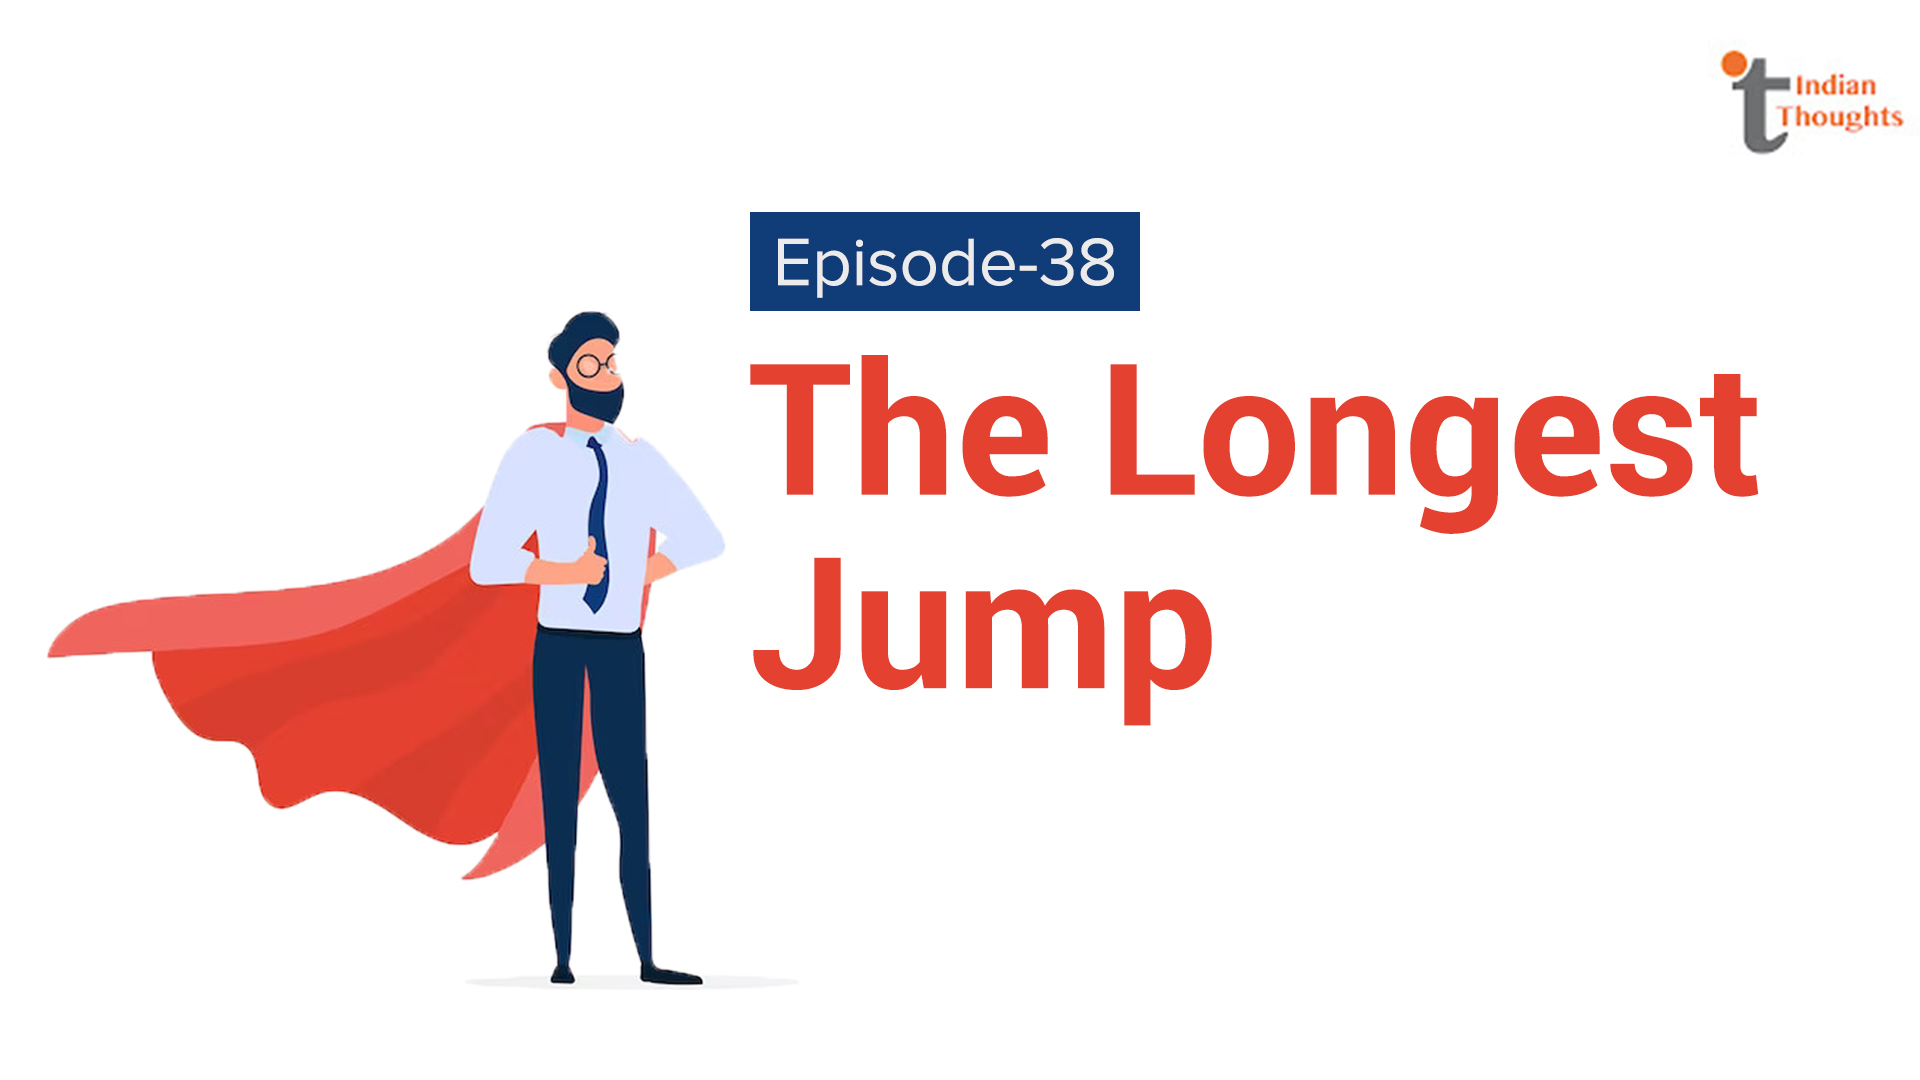 The longest jump